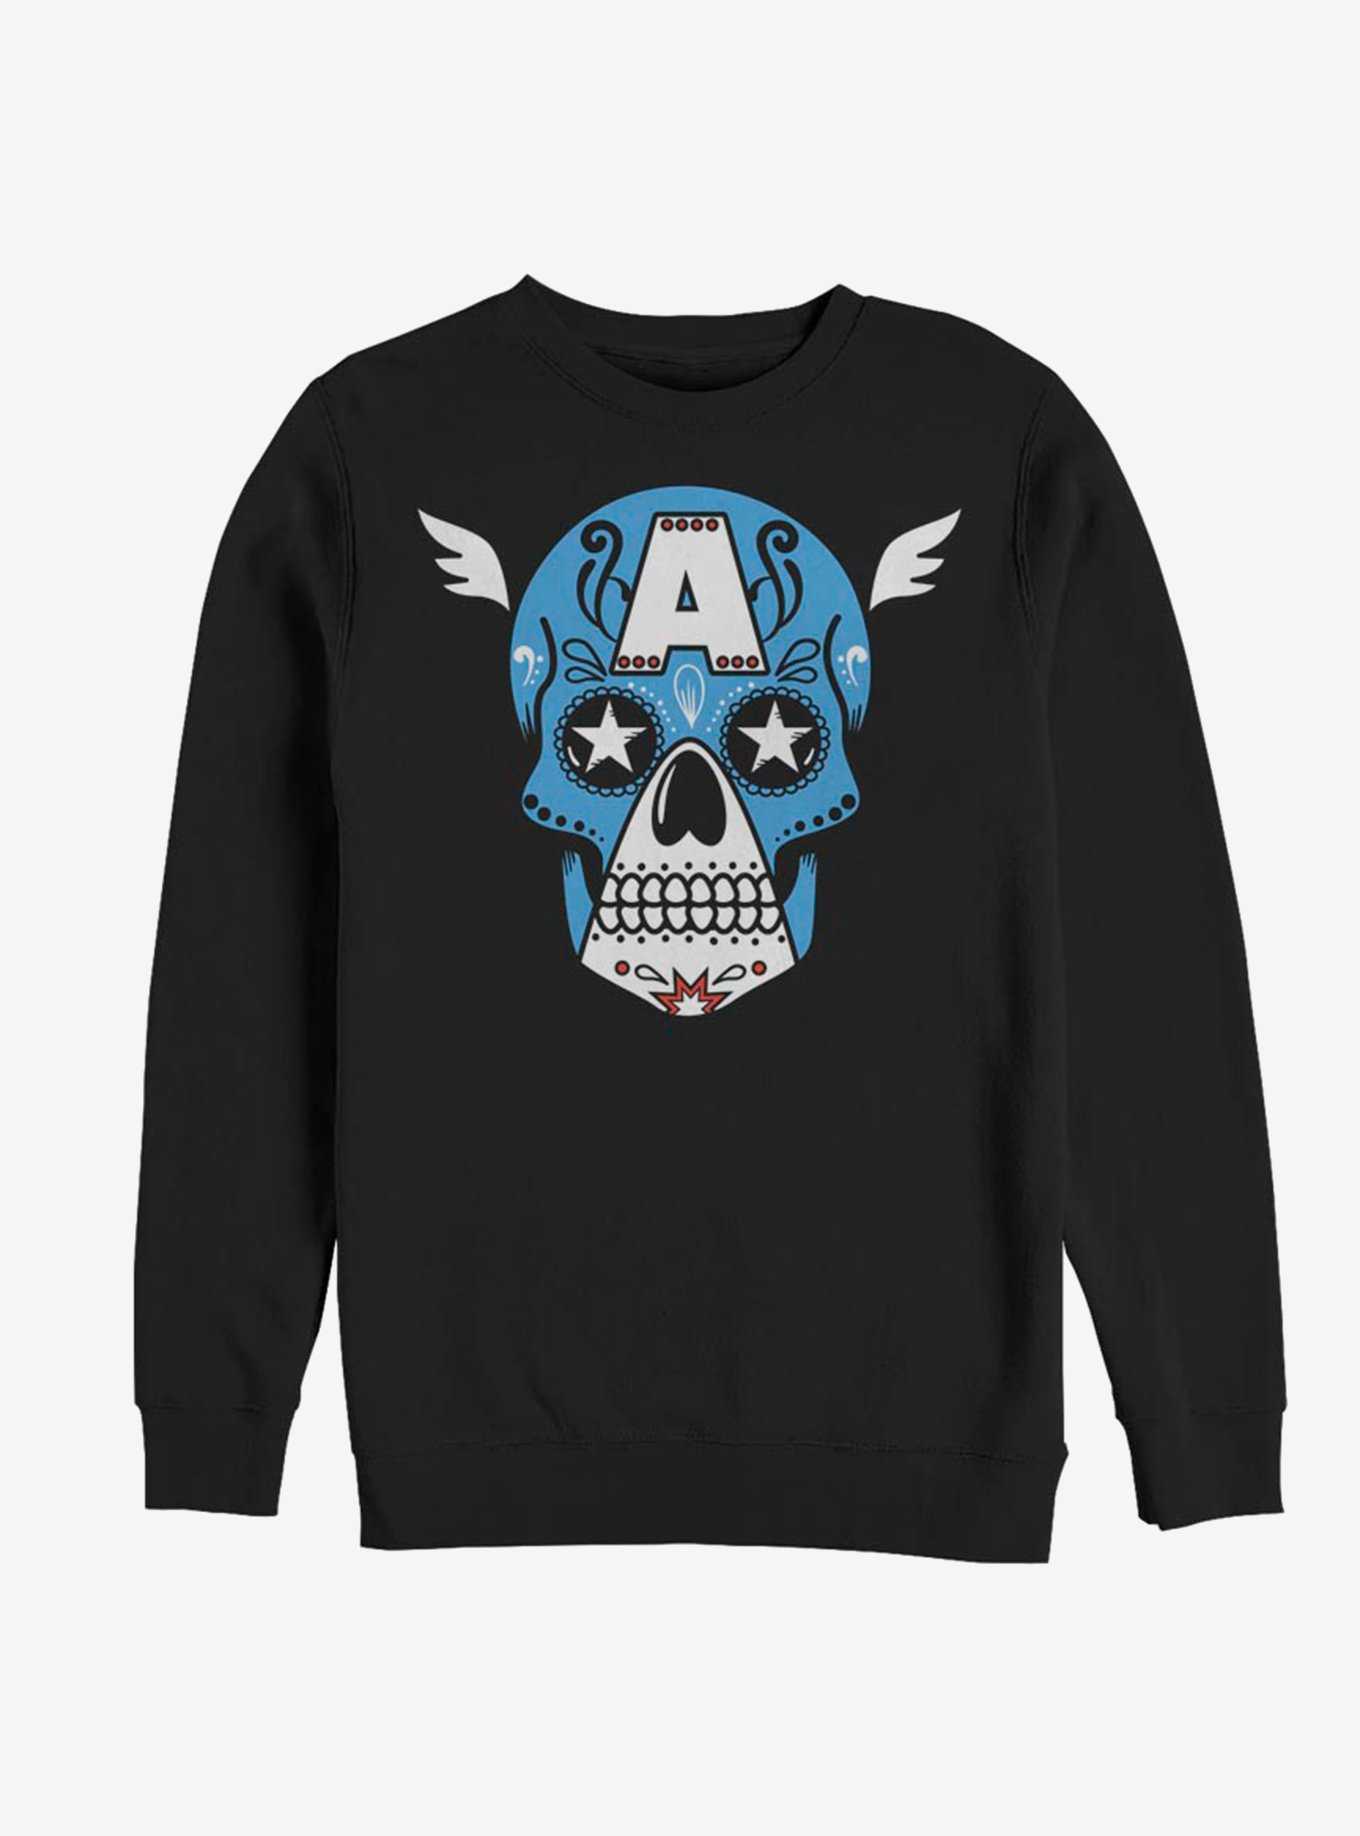 Marvel Captain America Sugar Skull Sweatshirt, , hi-res